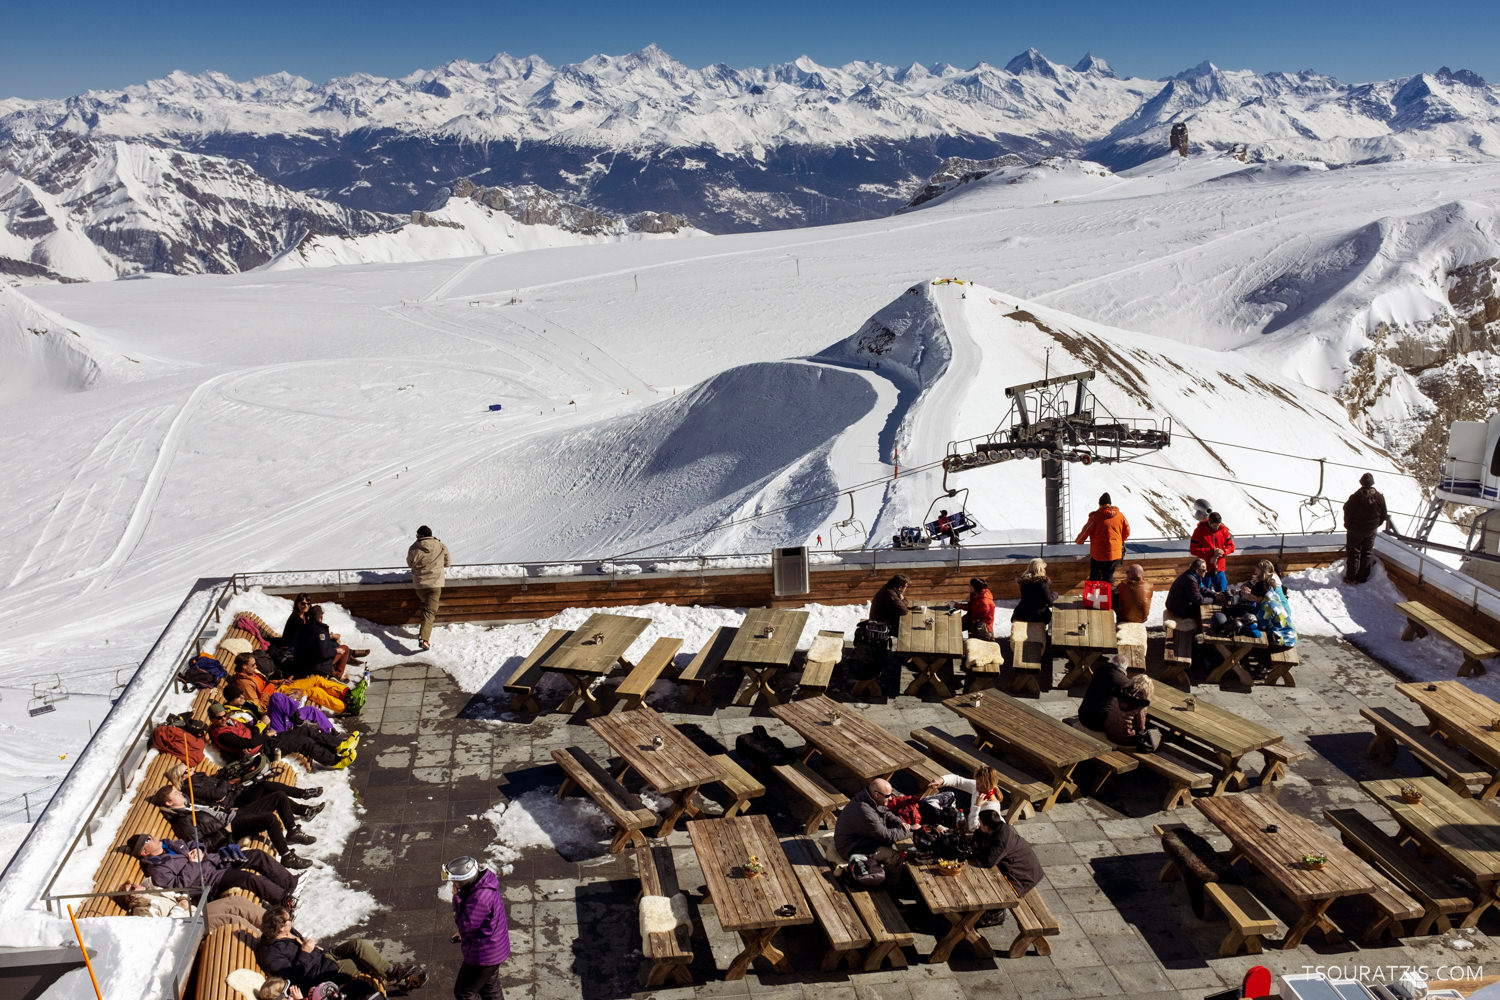 Photos from Glacier 3000 ski station